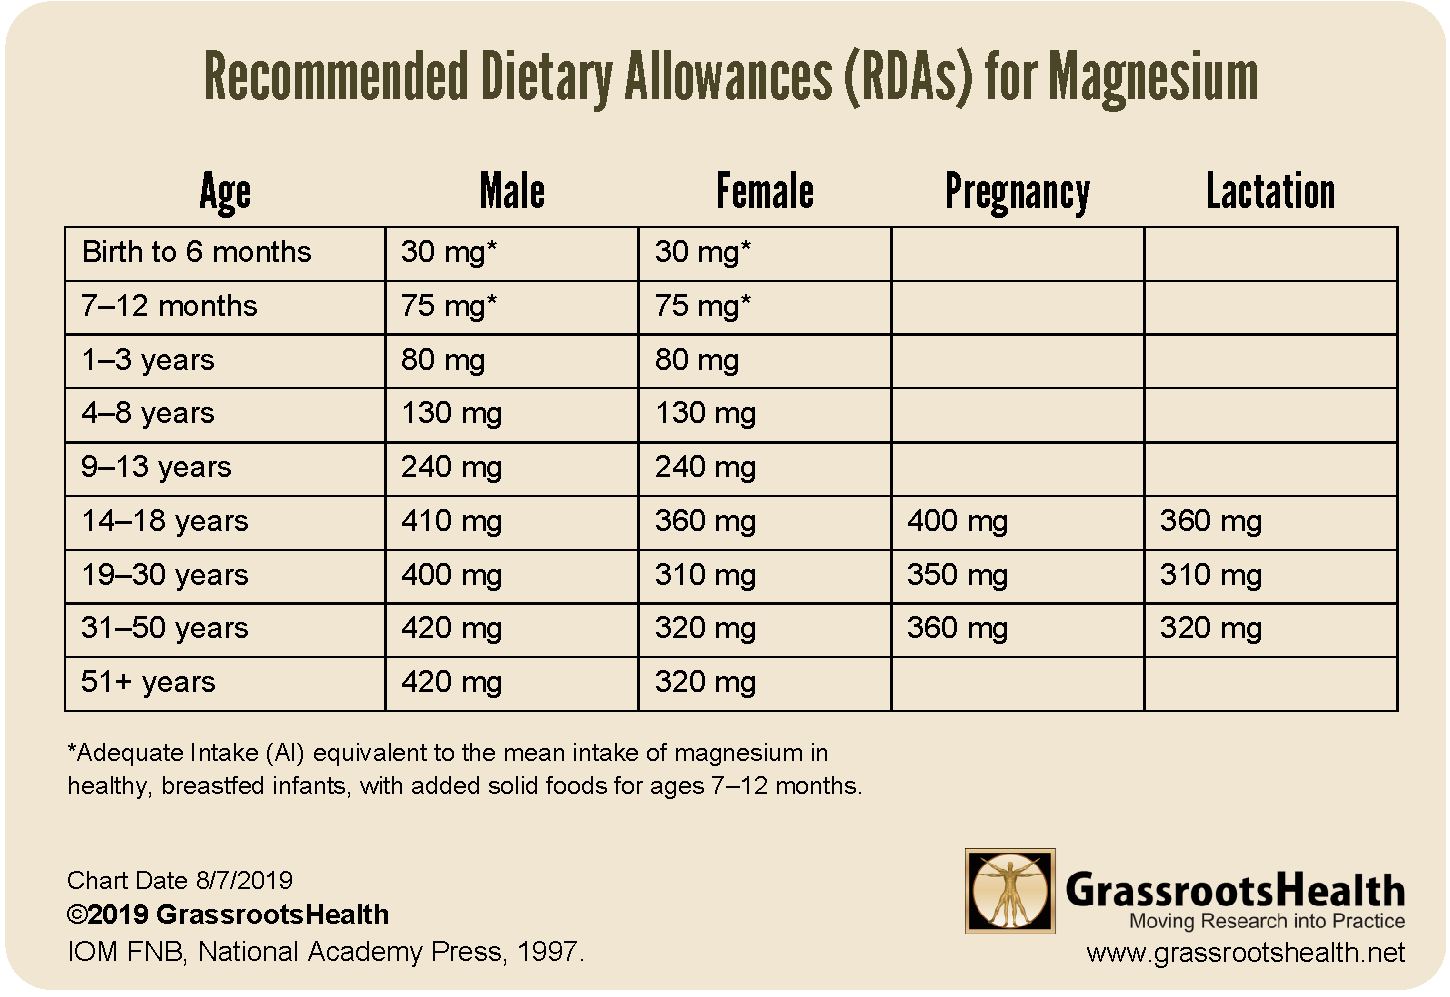 Magnesium dosage recommendations